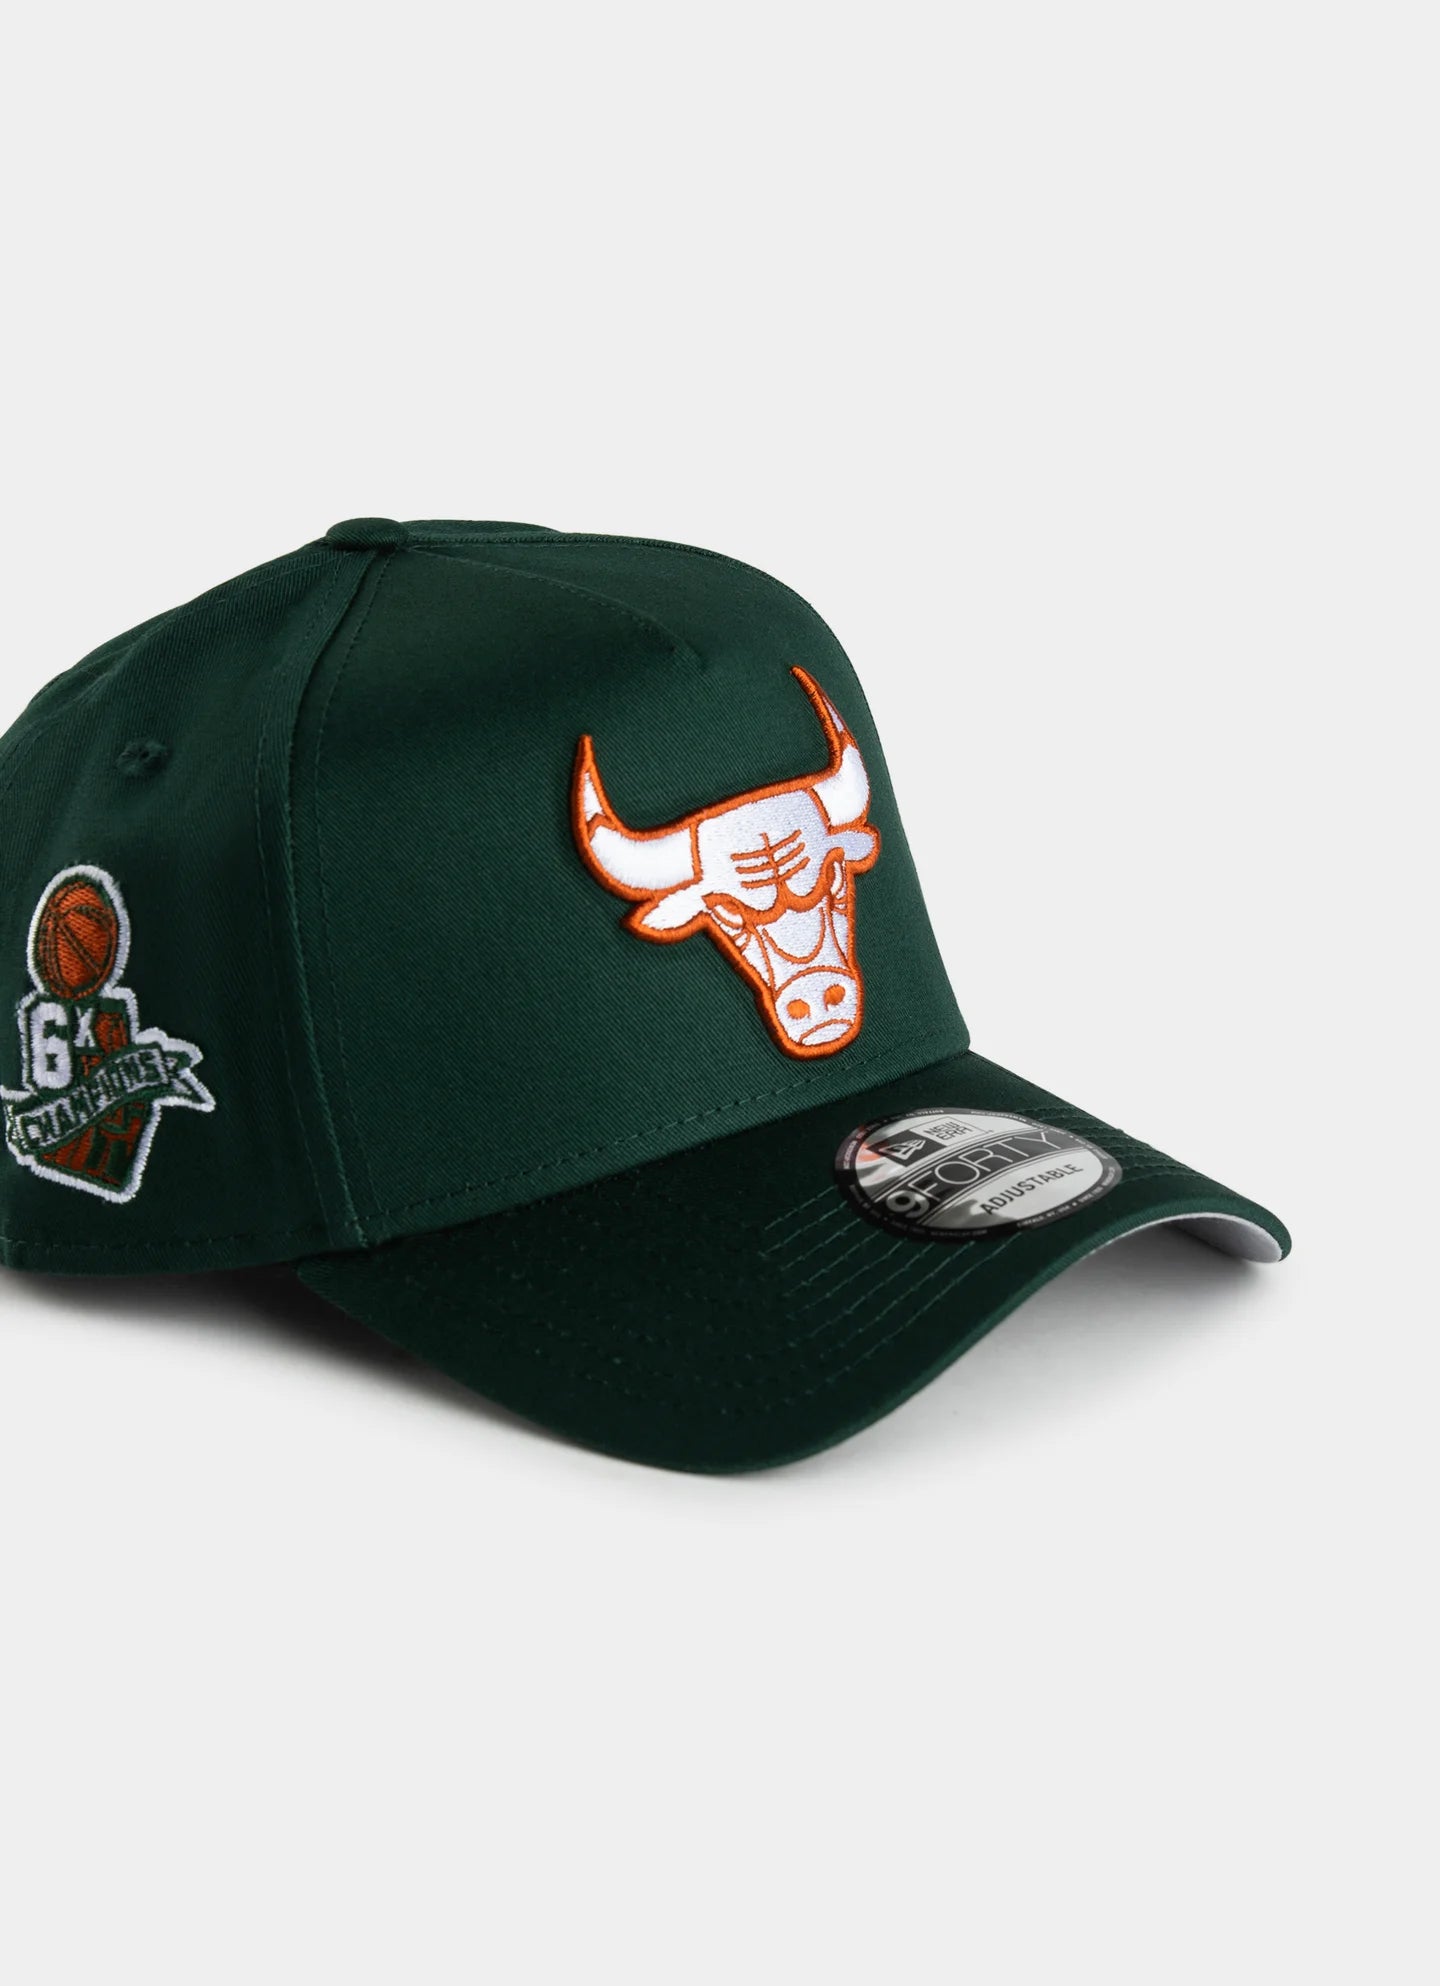 NEW ERA Chicago Bulls 9FORTY A-Frame Snapback Cap - Copper/Green